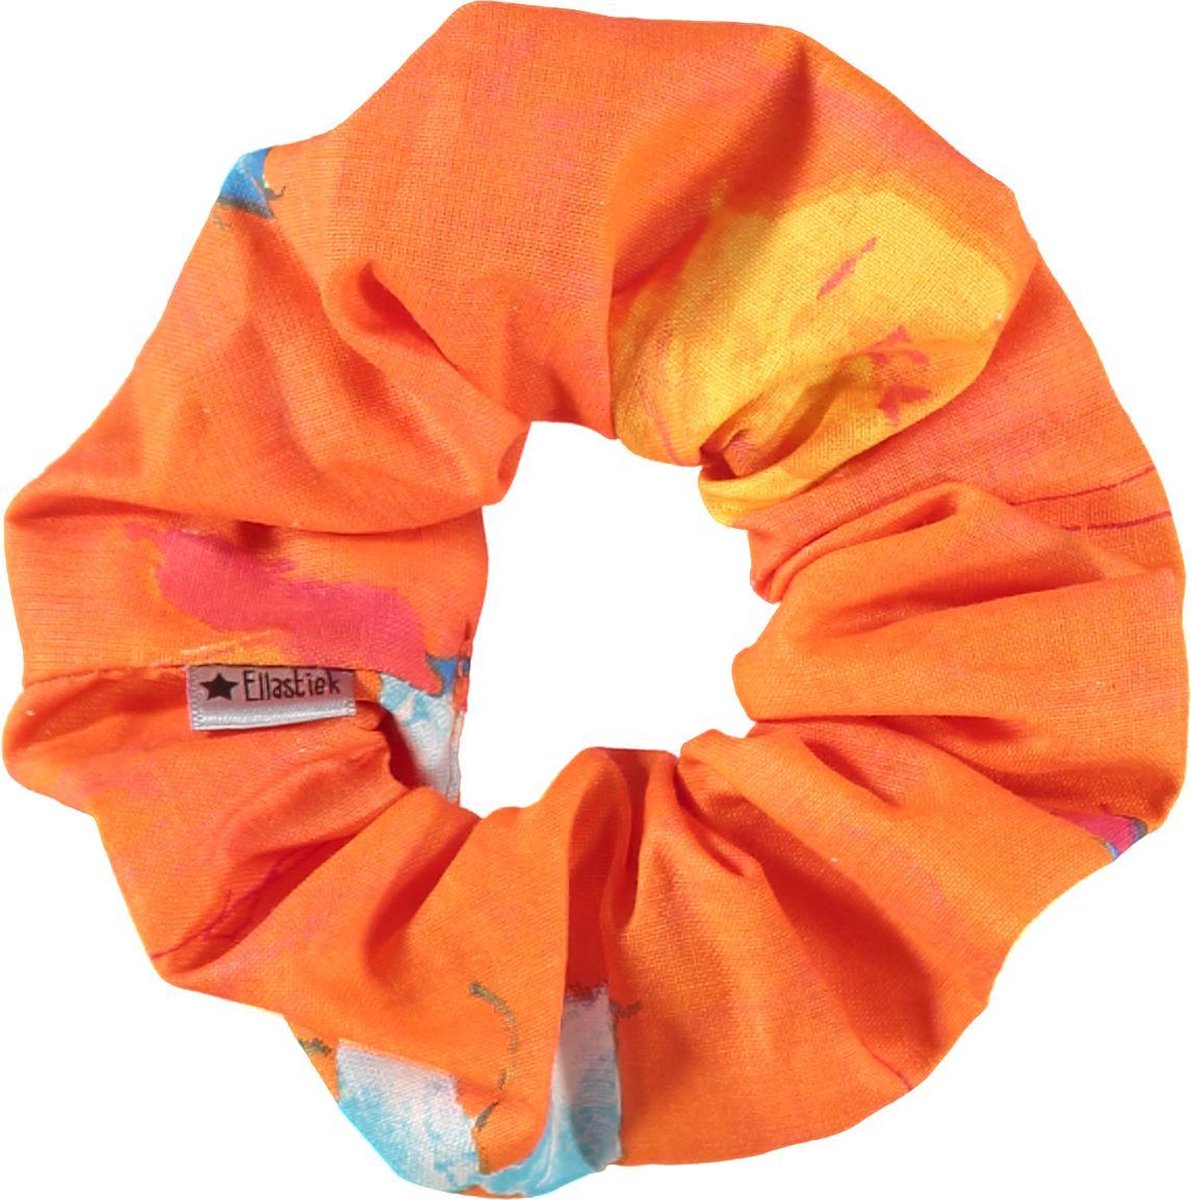 Ellastiek scrunchie Oranje EK Voetbal - haarelastiekjes - haar accessoire - luxe uitstraling en kwaliteit- Handmade in Amsterdam(williestiek)